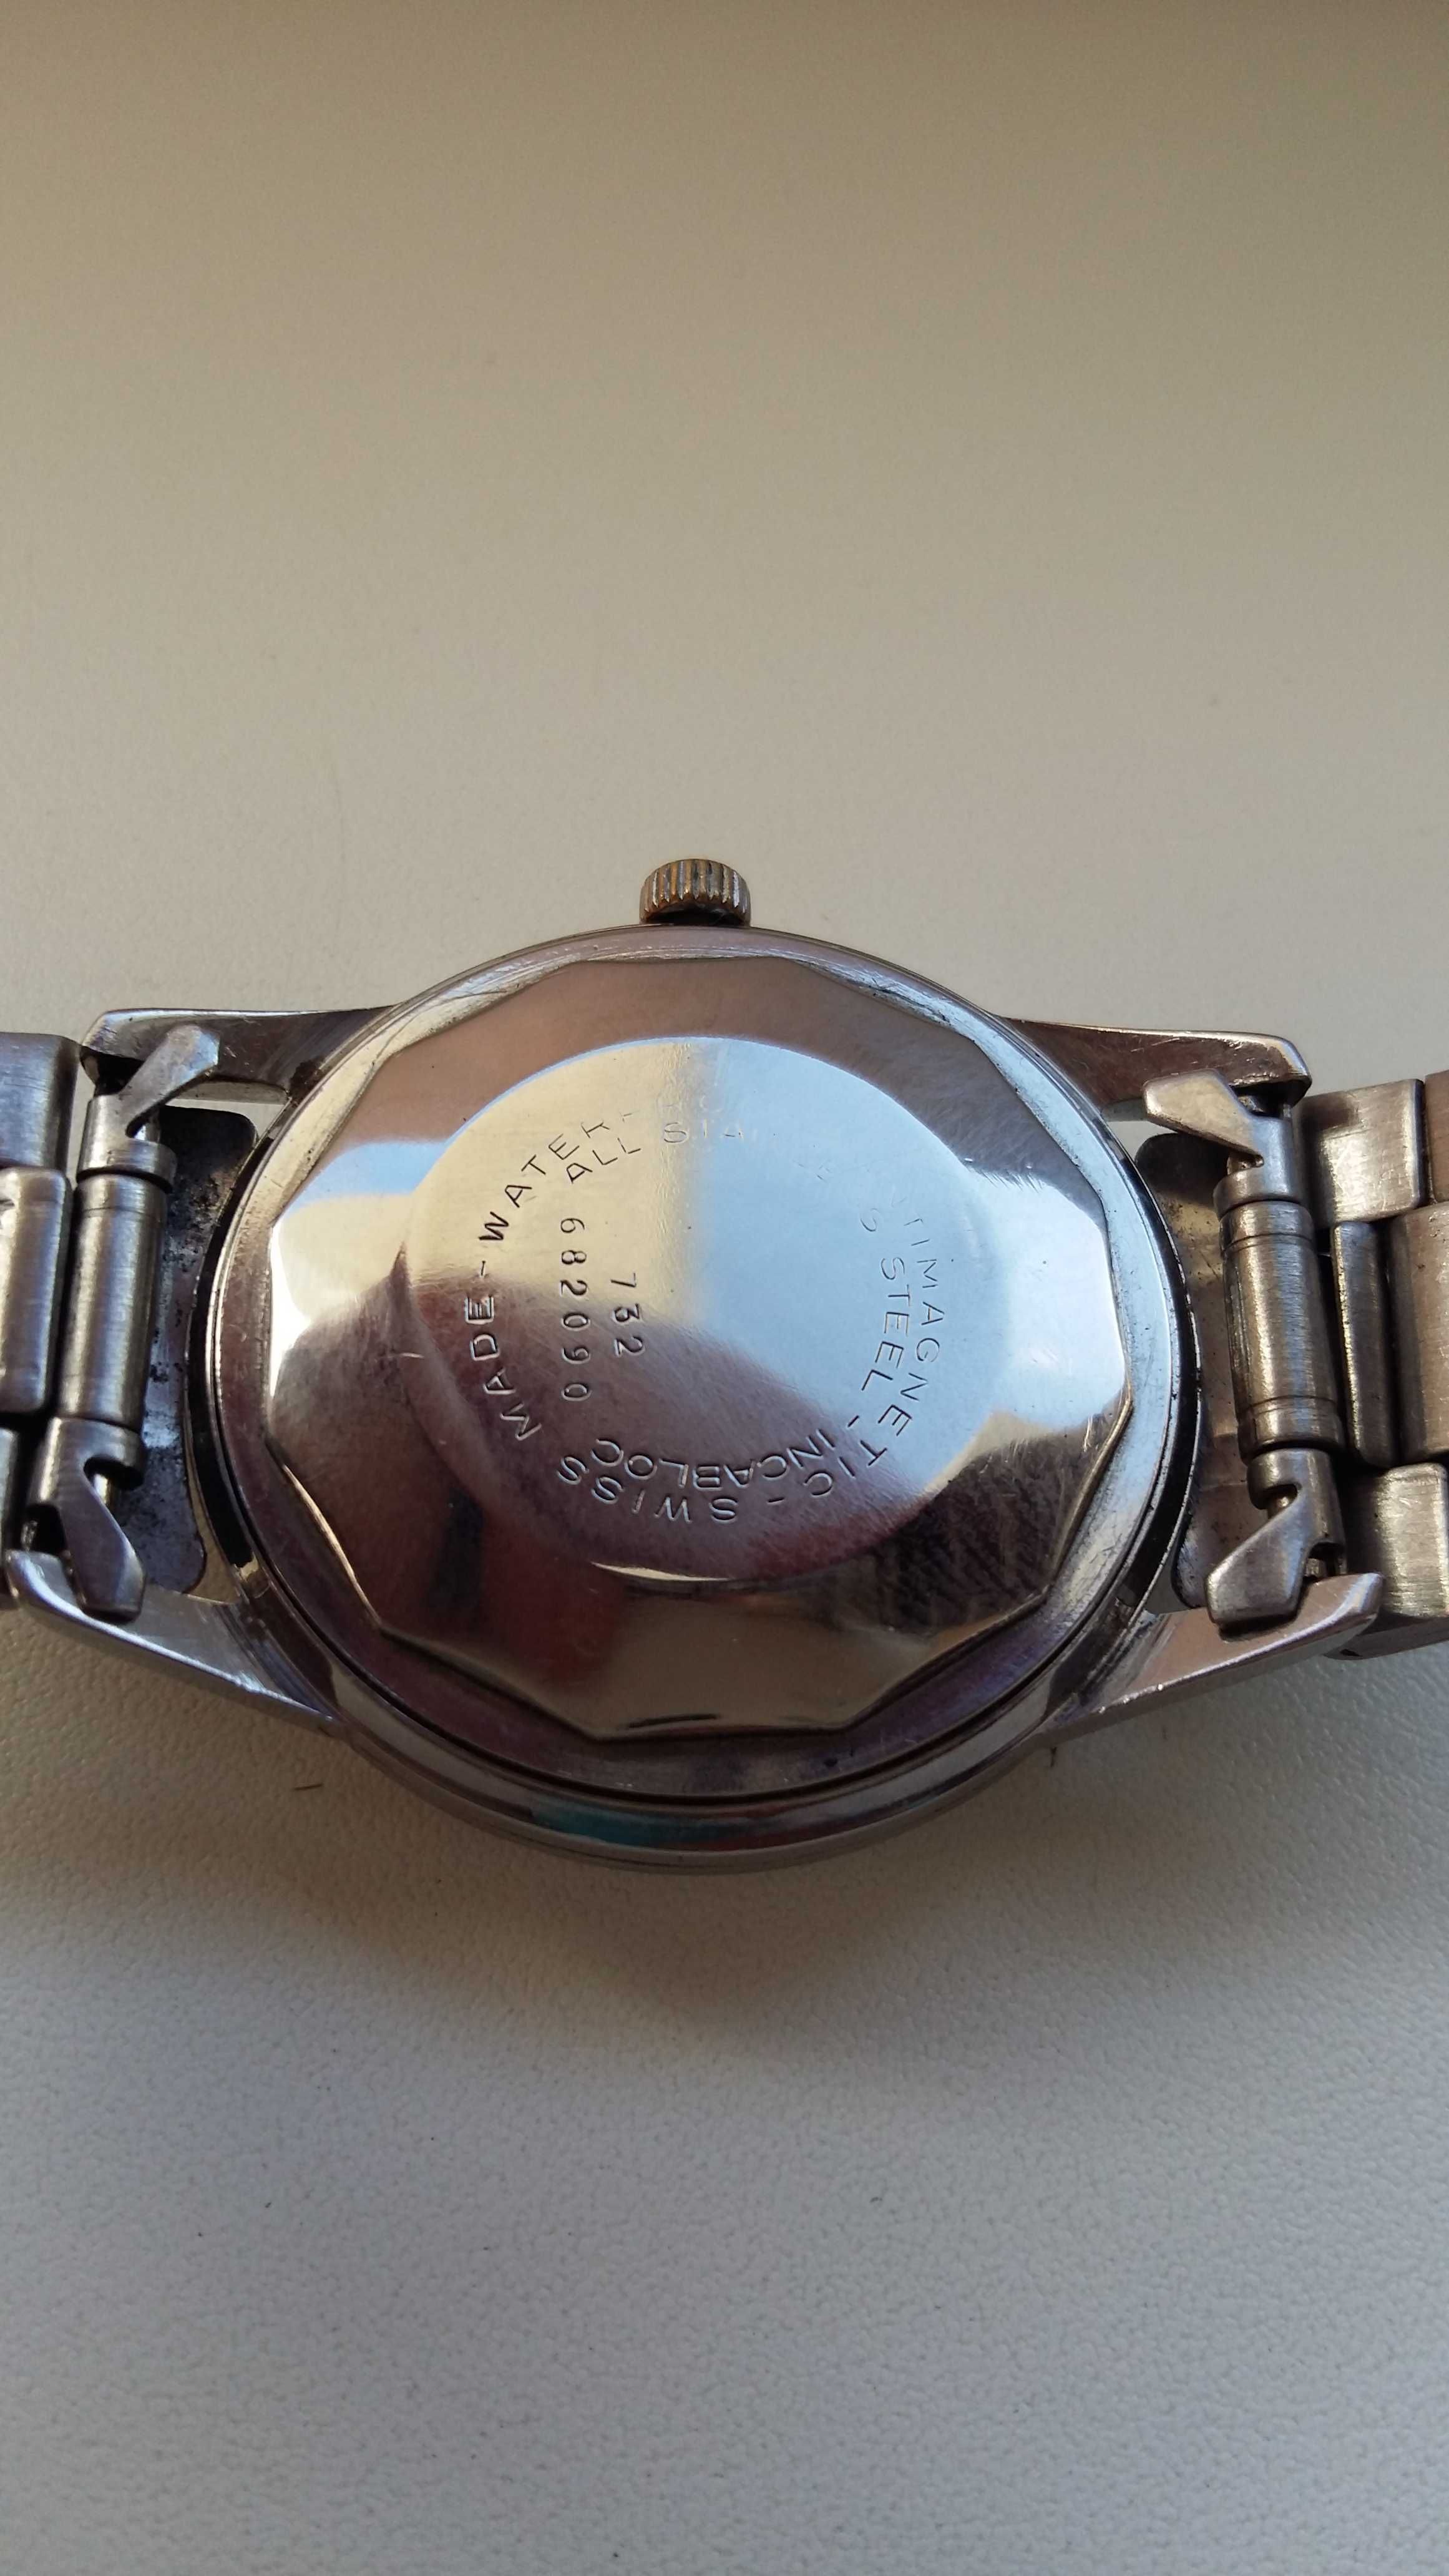 Zegarek Aero-Matic Aut. Watch 25 jewels stal nie srebro super stan.